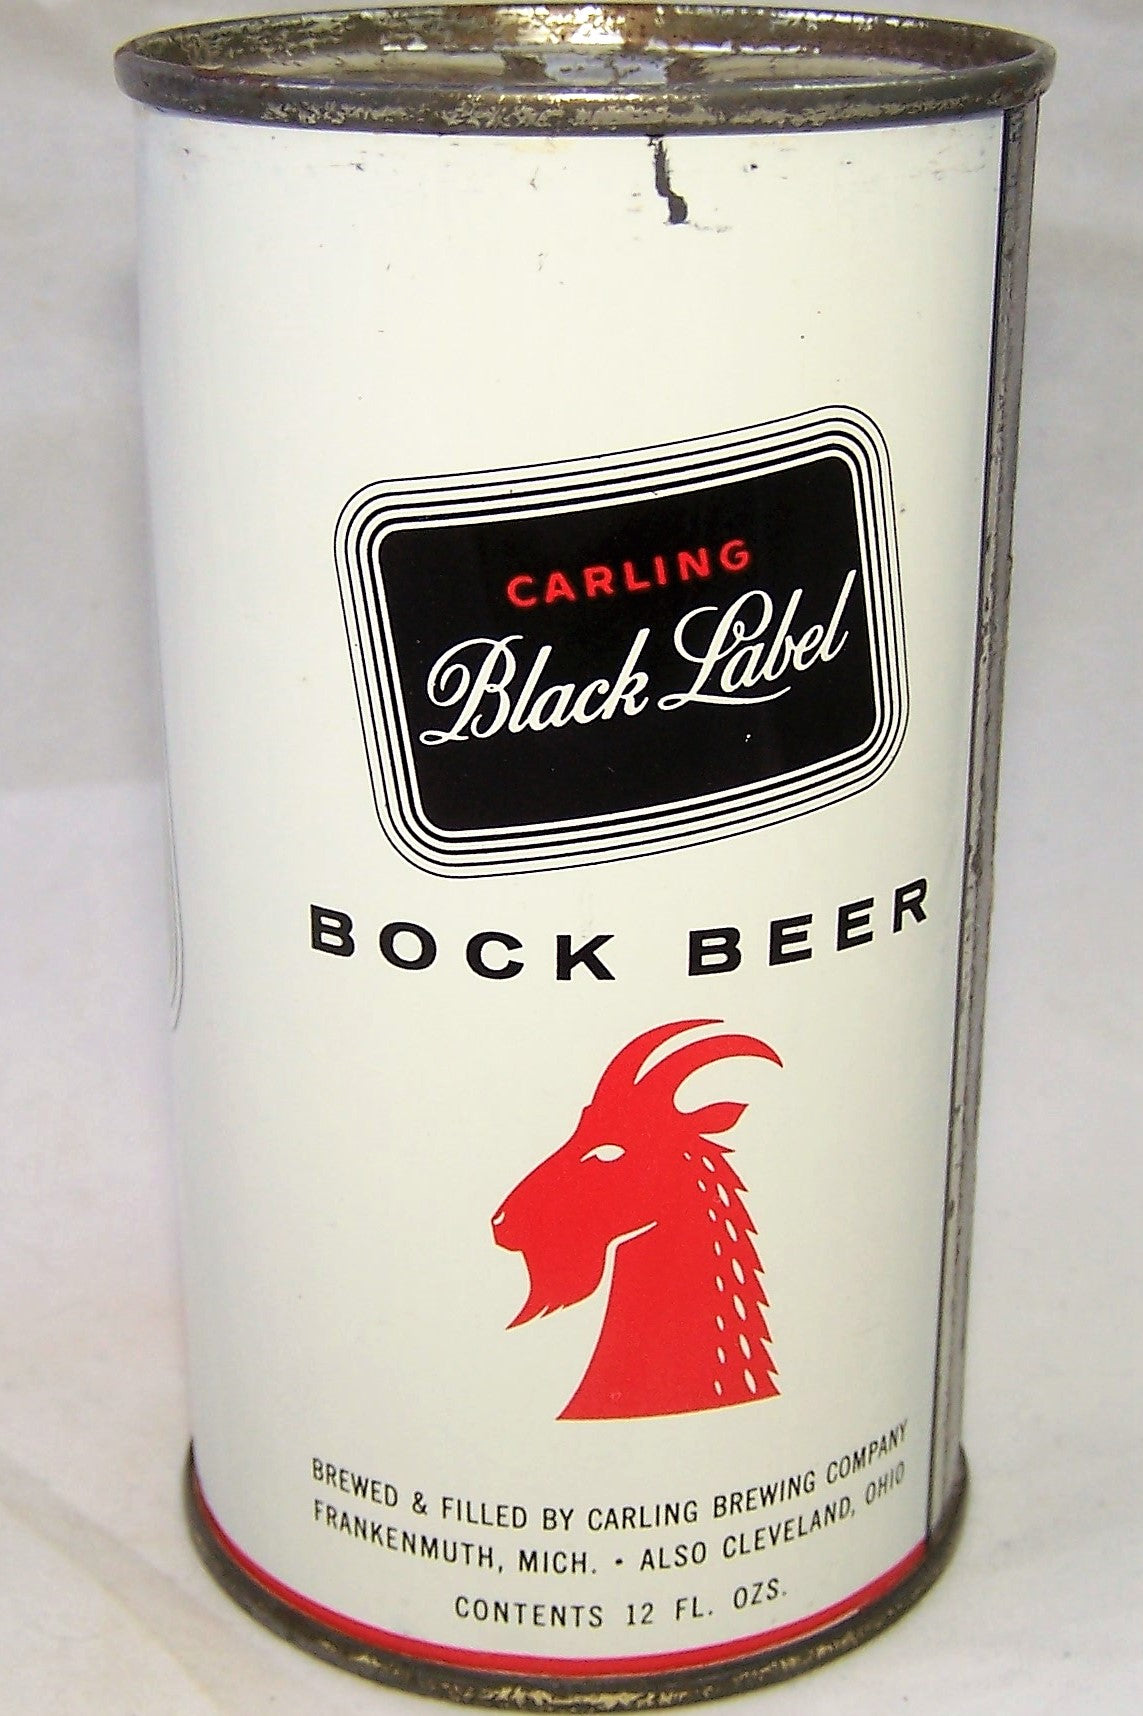 Carling Black Label Bock Beer, USBC 38-10, Grade 1 to 1/1+ Sold on 02/08/19